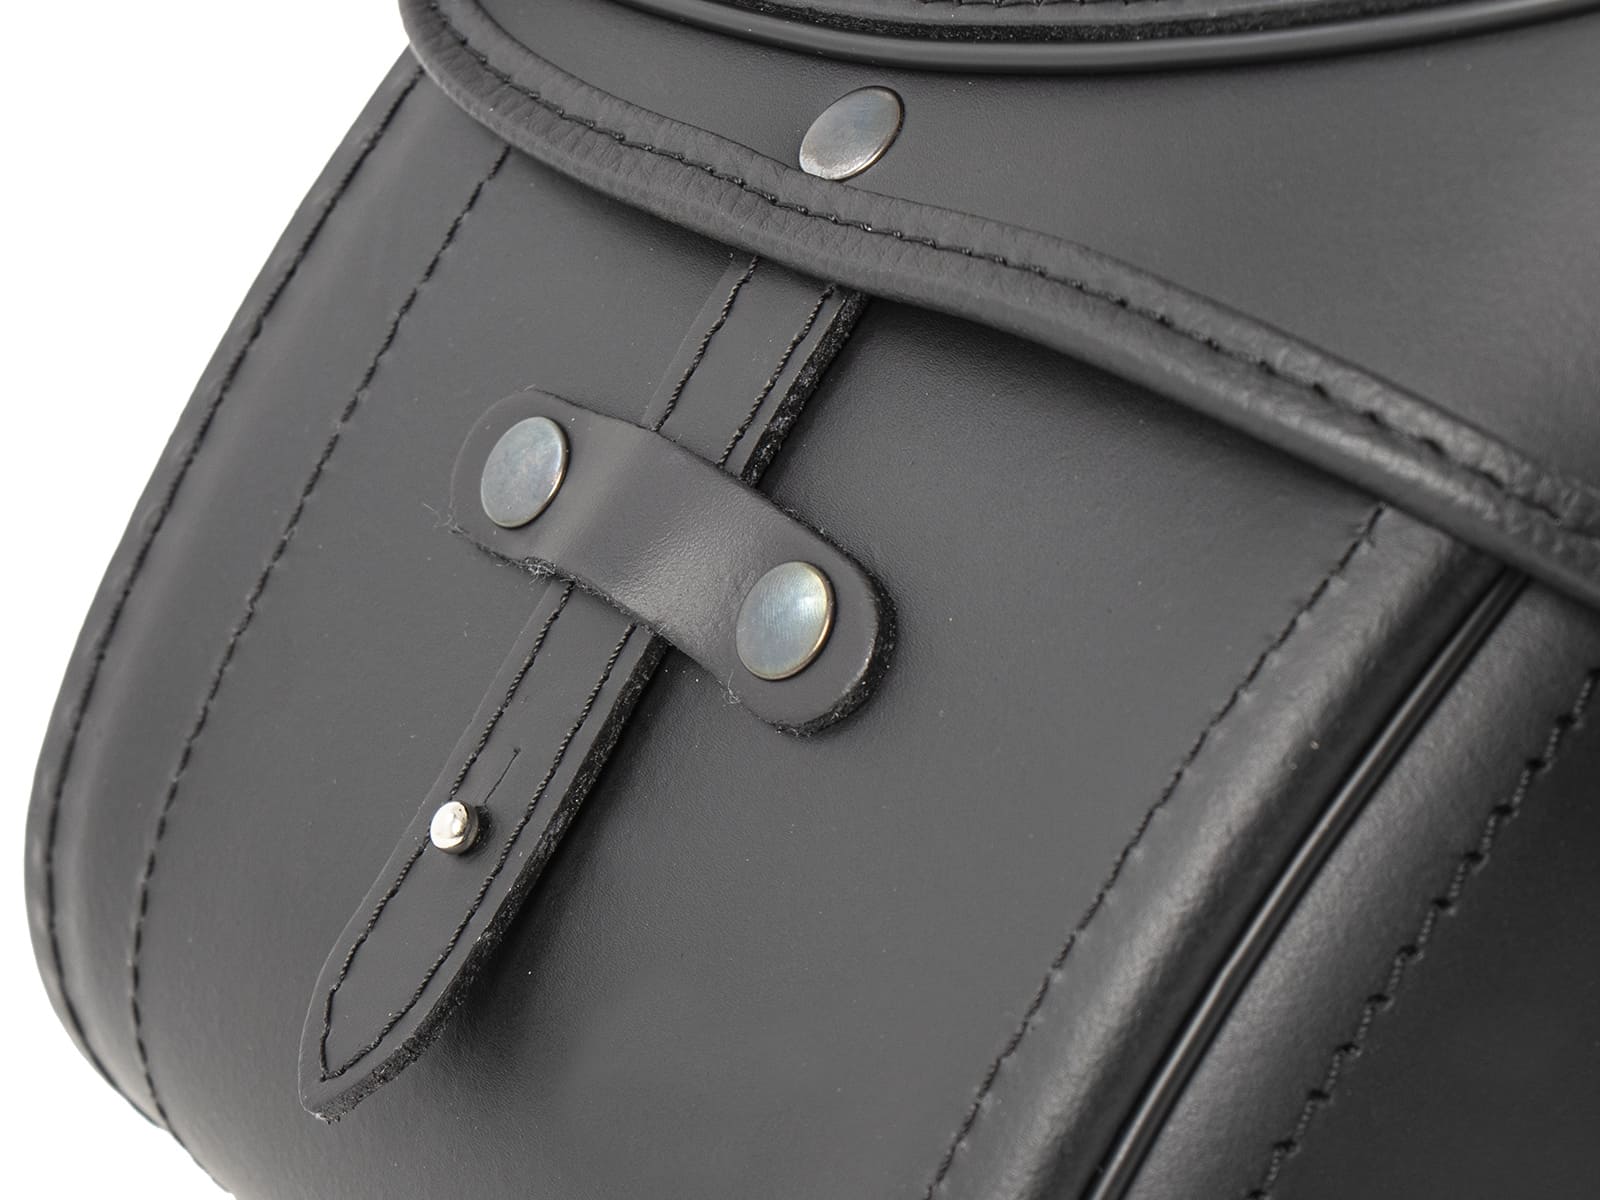 Buffalo Big leather bag set black for C-Bow holder